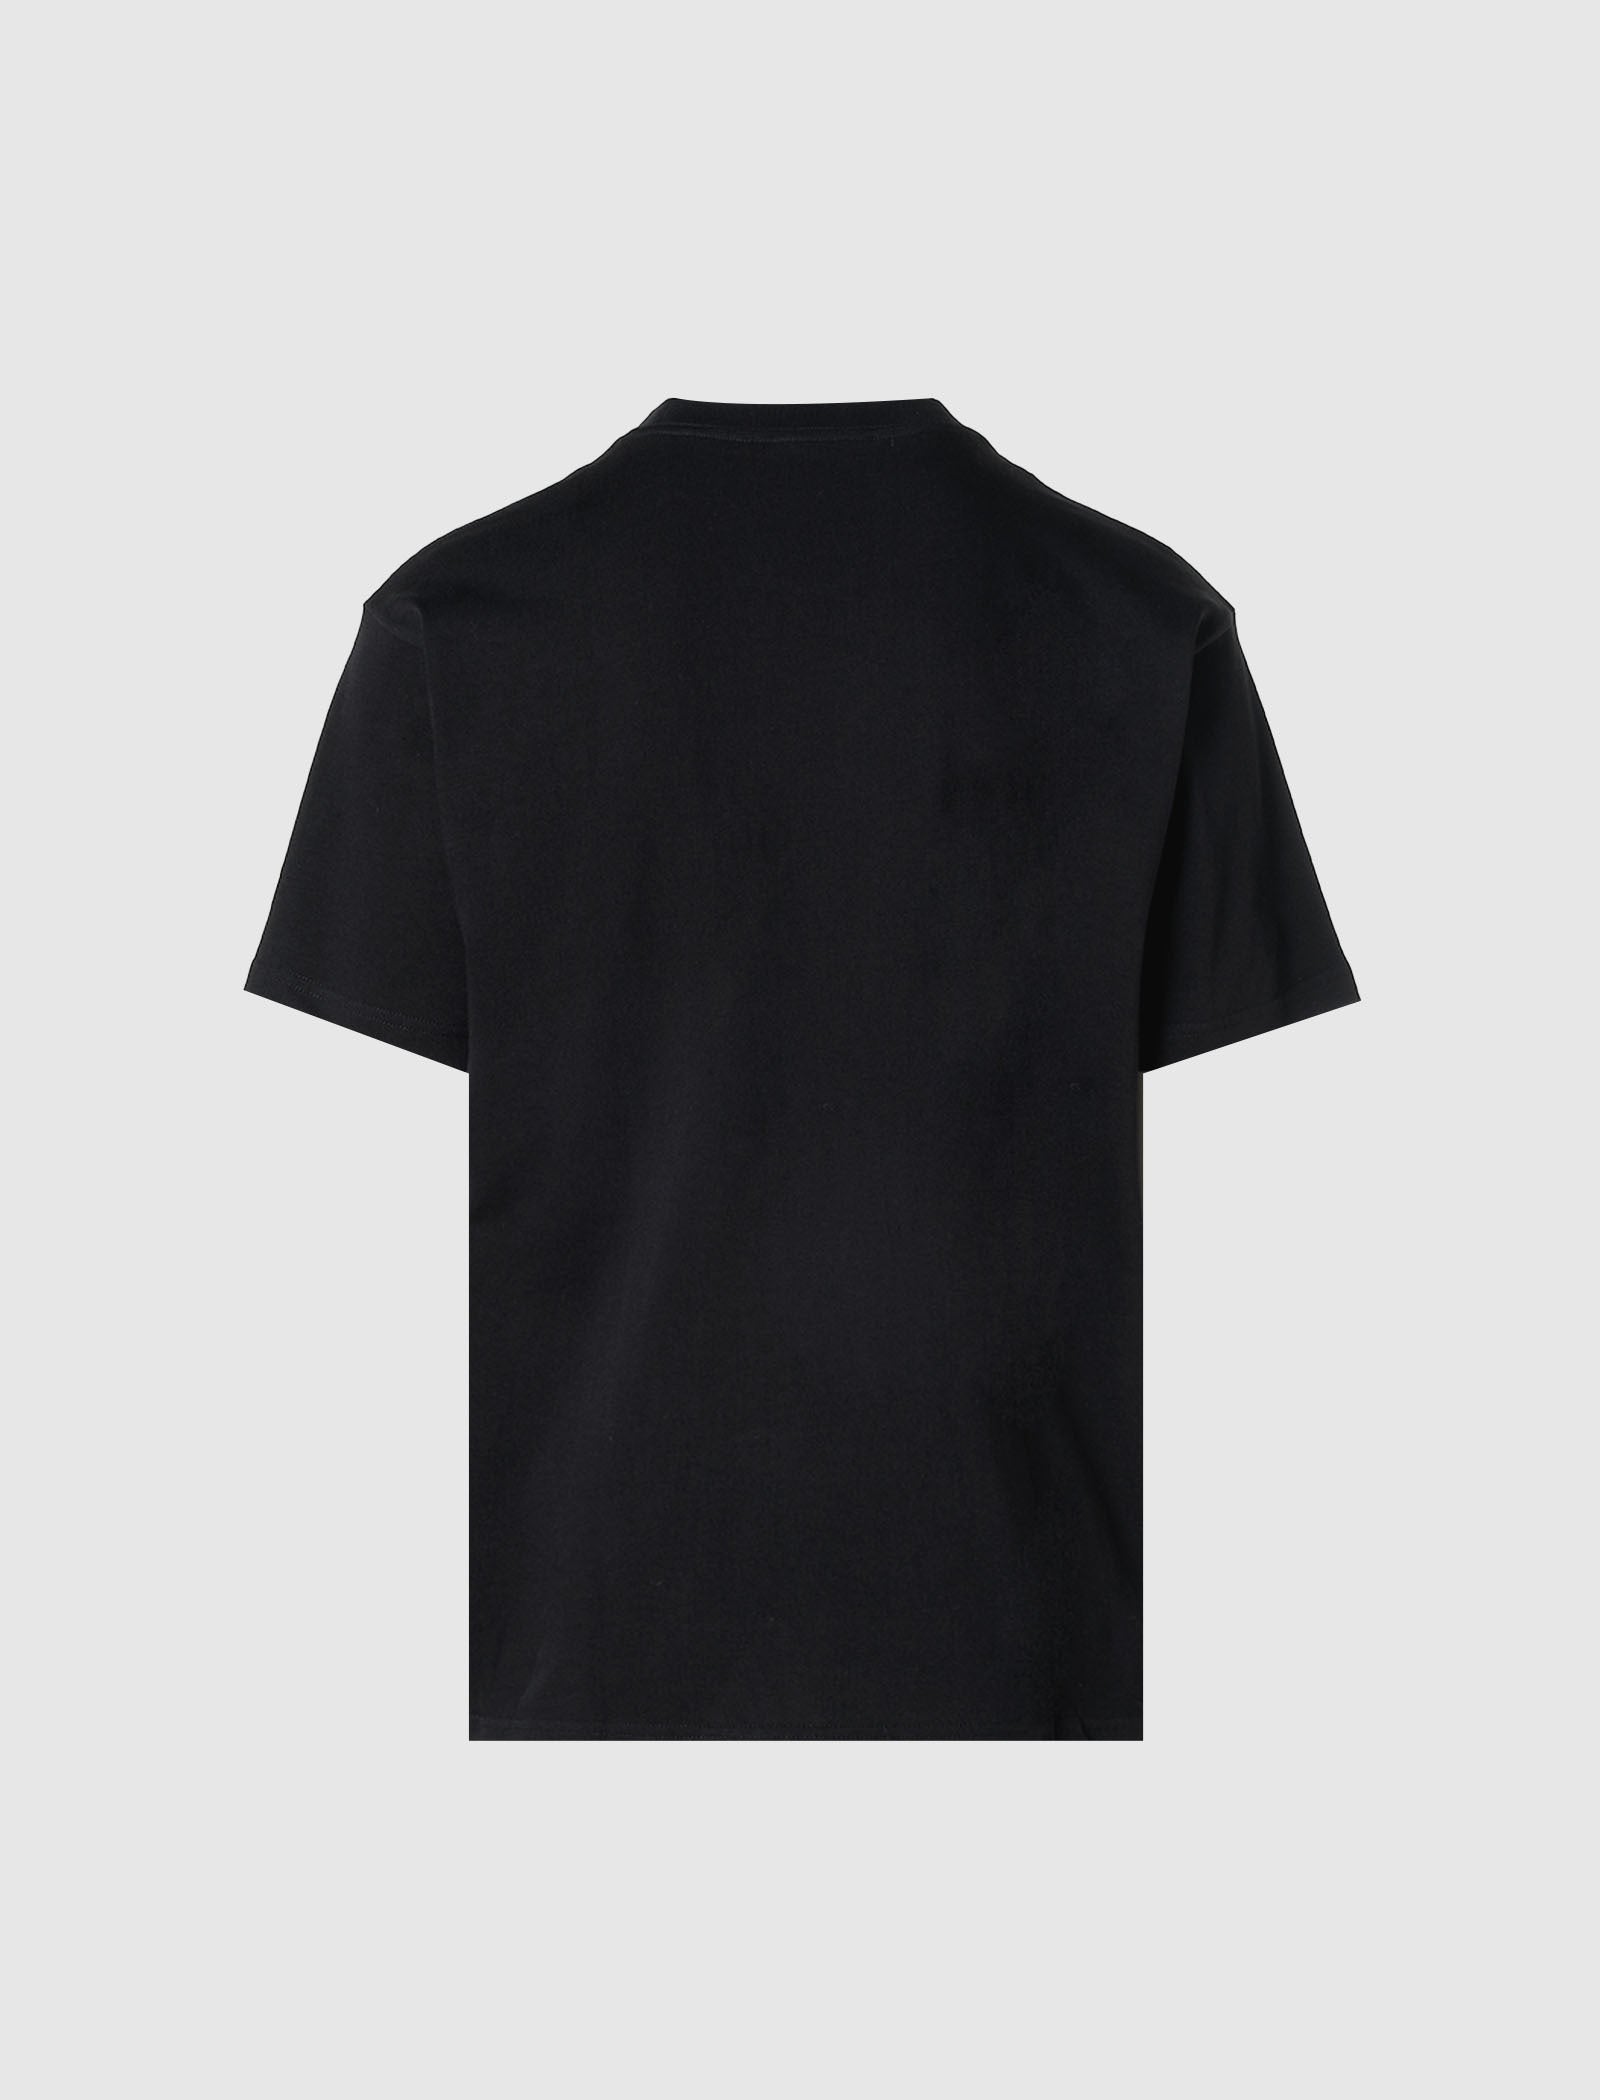 HOMME+ Contrast Stitch Short Sleeve Shirt Black